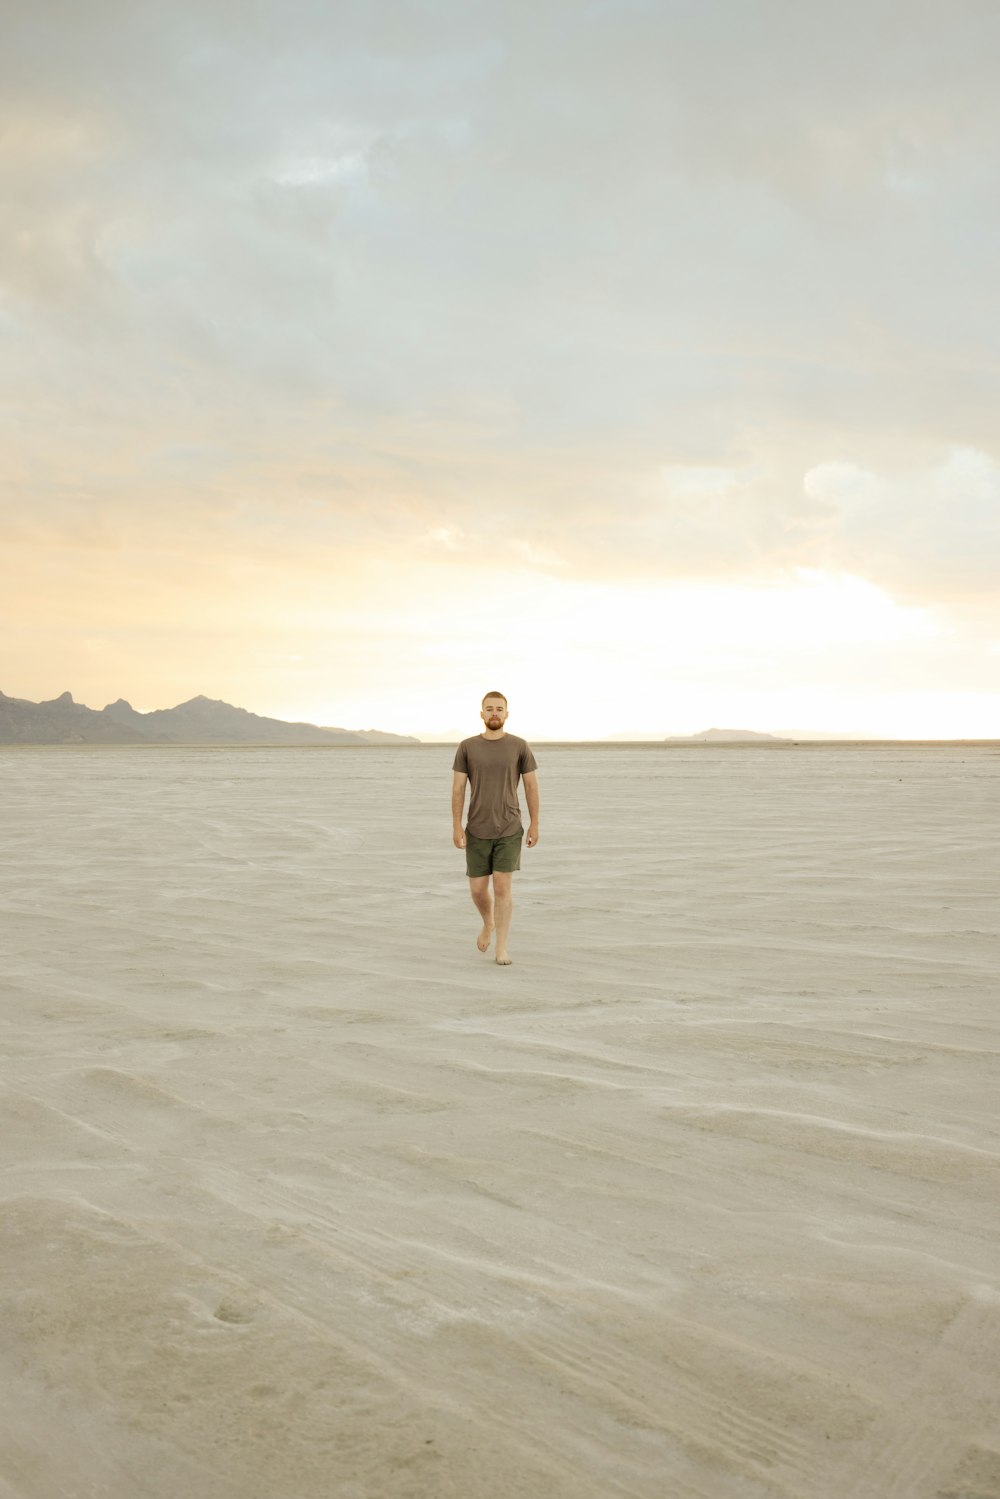 a man walking across a sandy plain under a cloudy sky